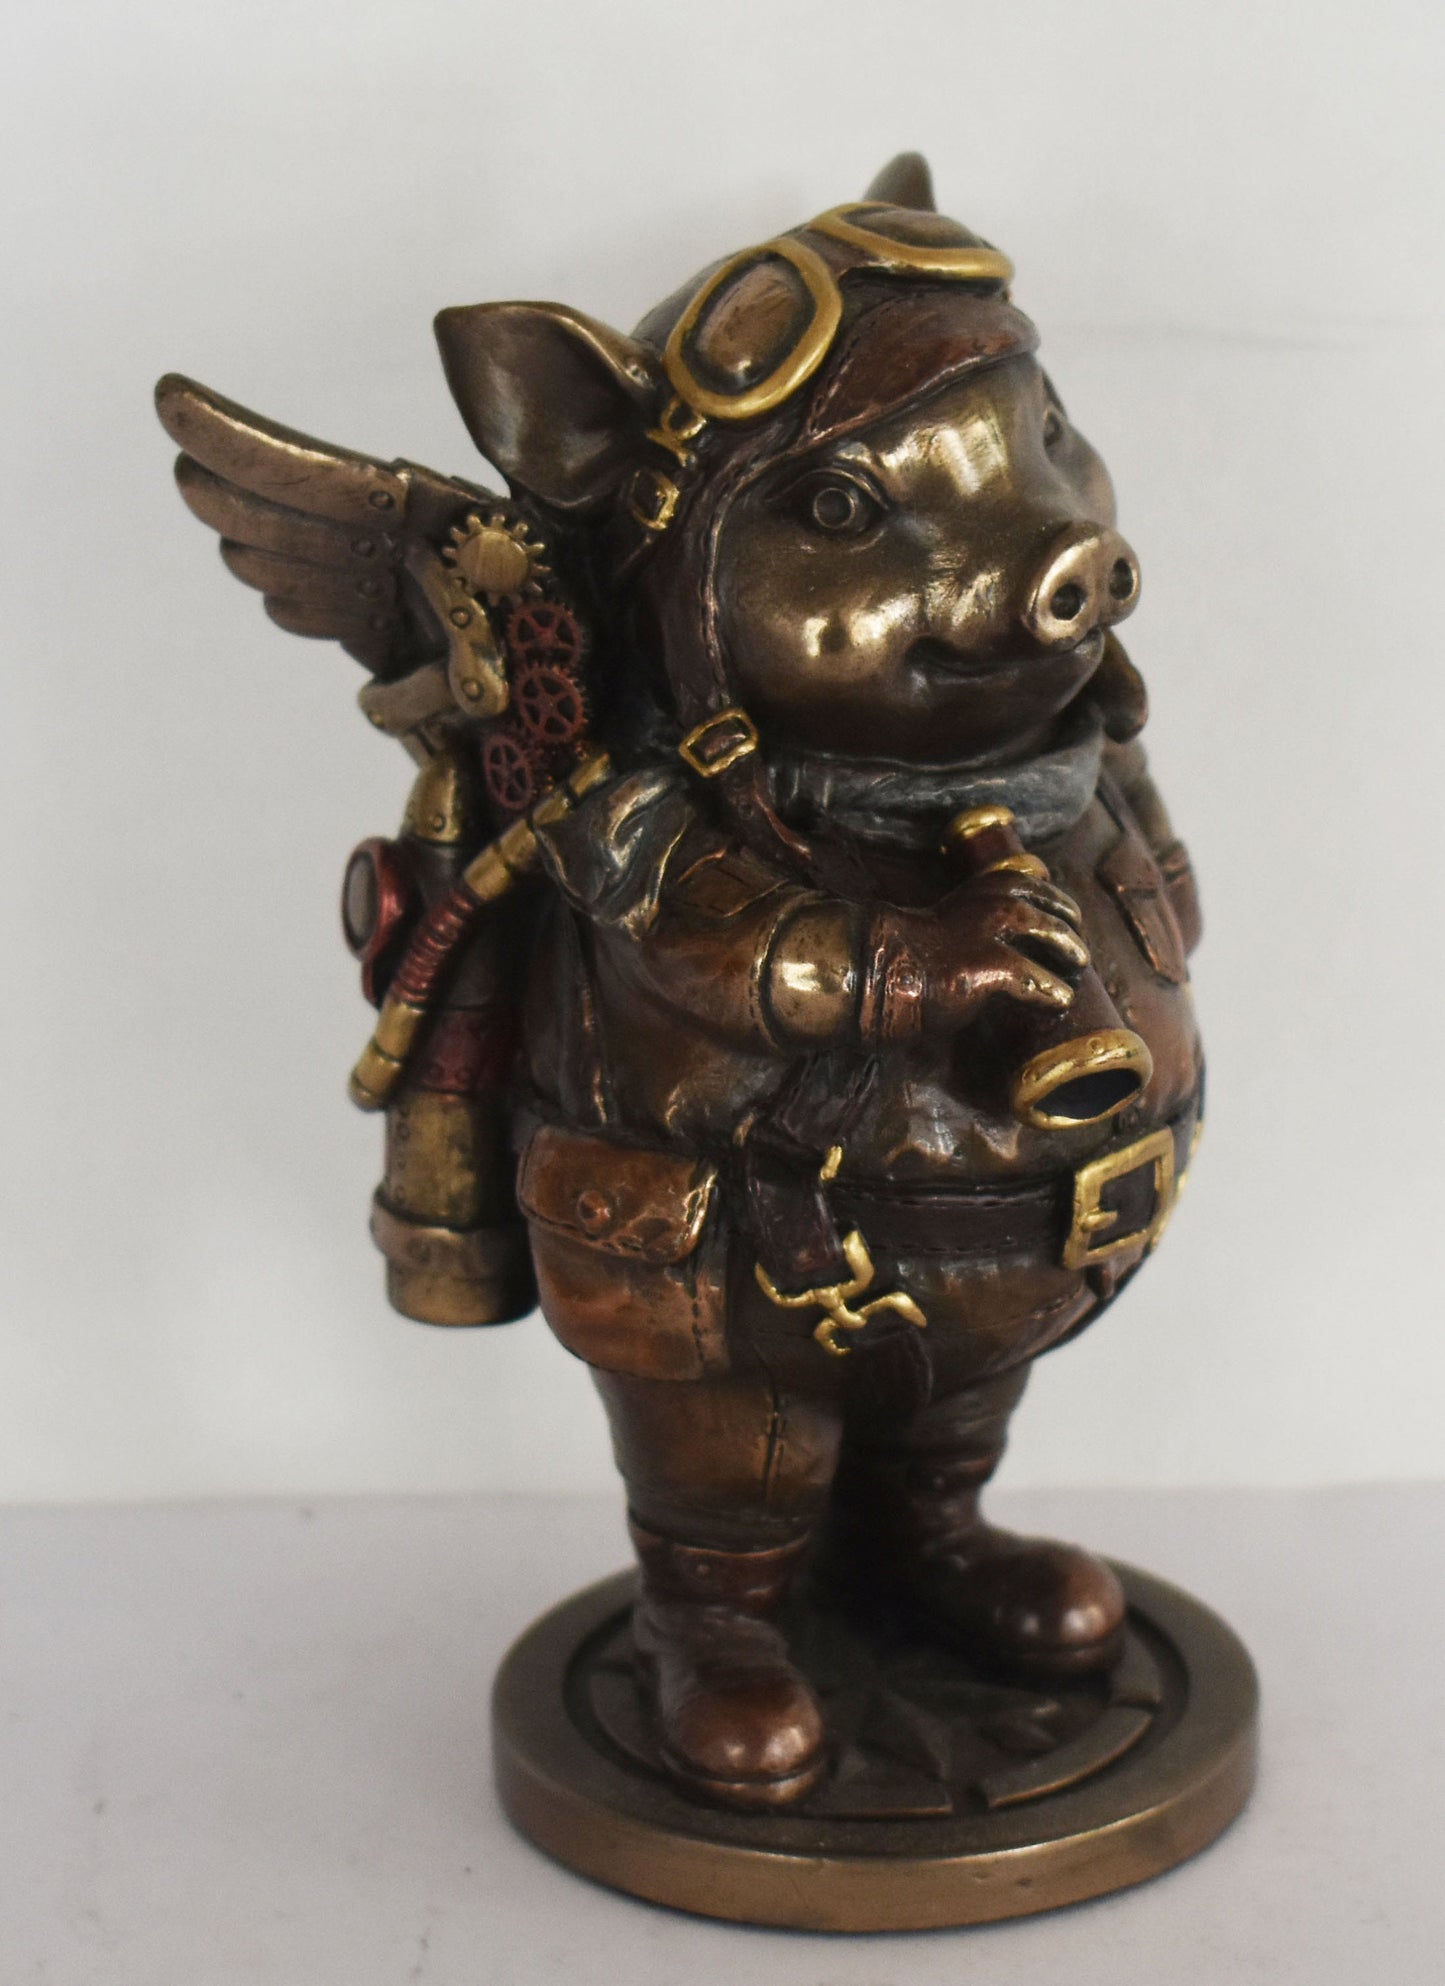 Pig Statue  - Explorer - Steampunk - Modern Art - Decoration - Cold Cast Bronze Resin